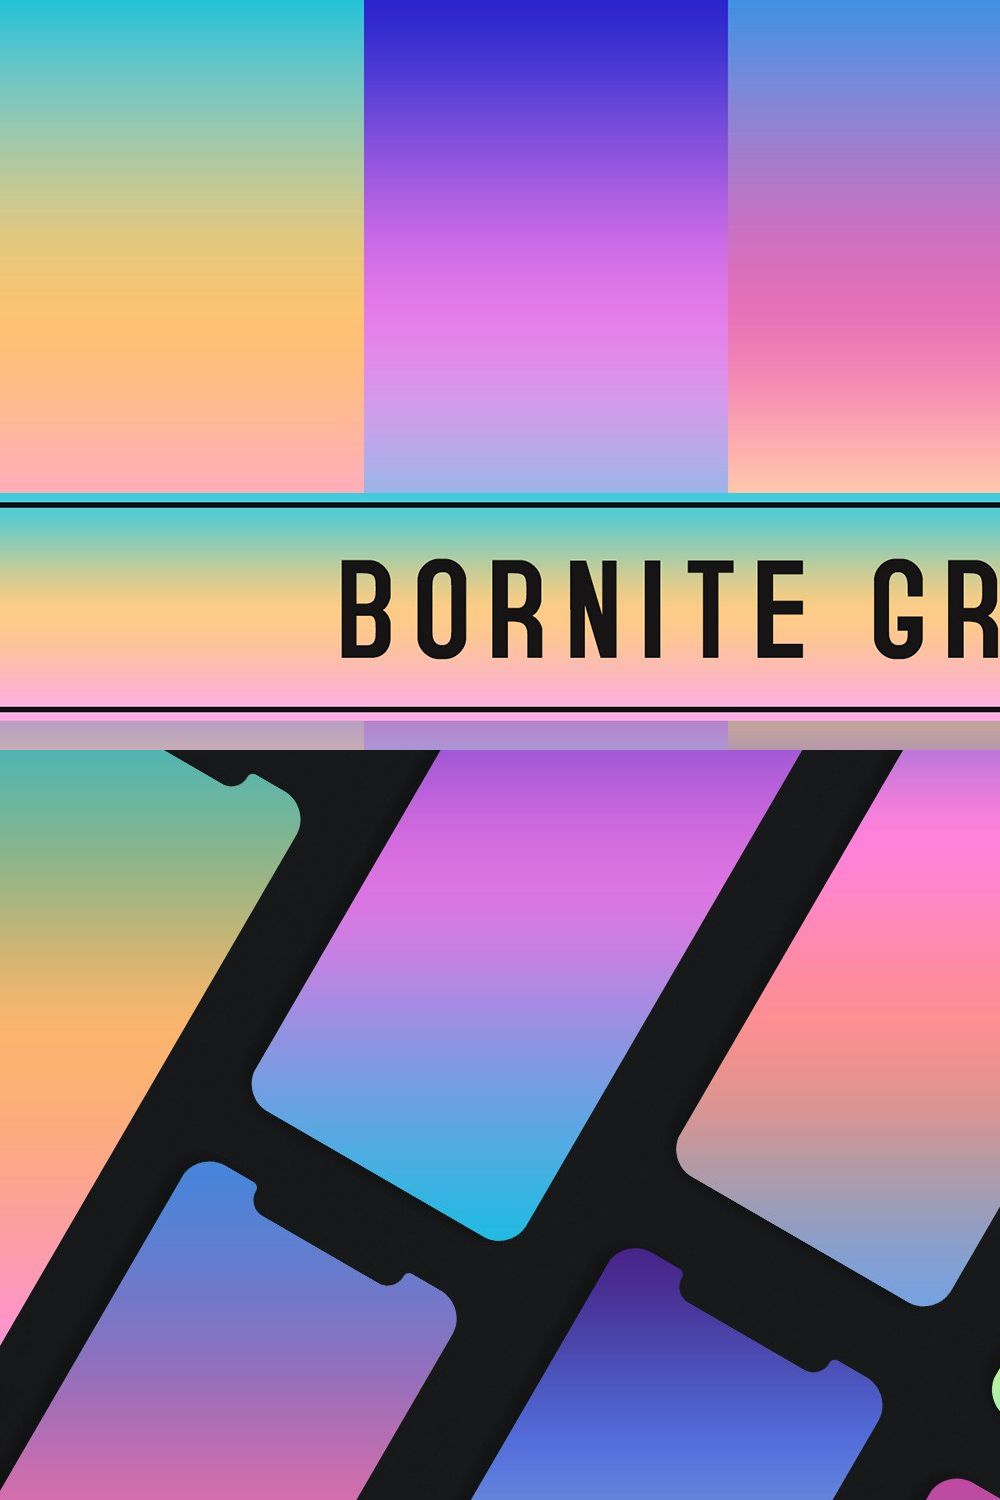 Bornite Gradients pinterest preview image.